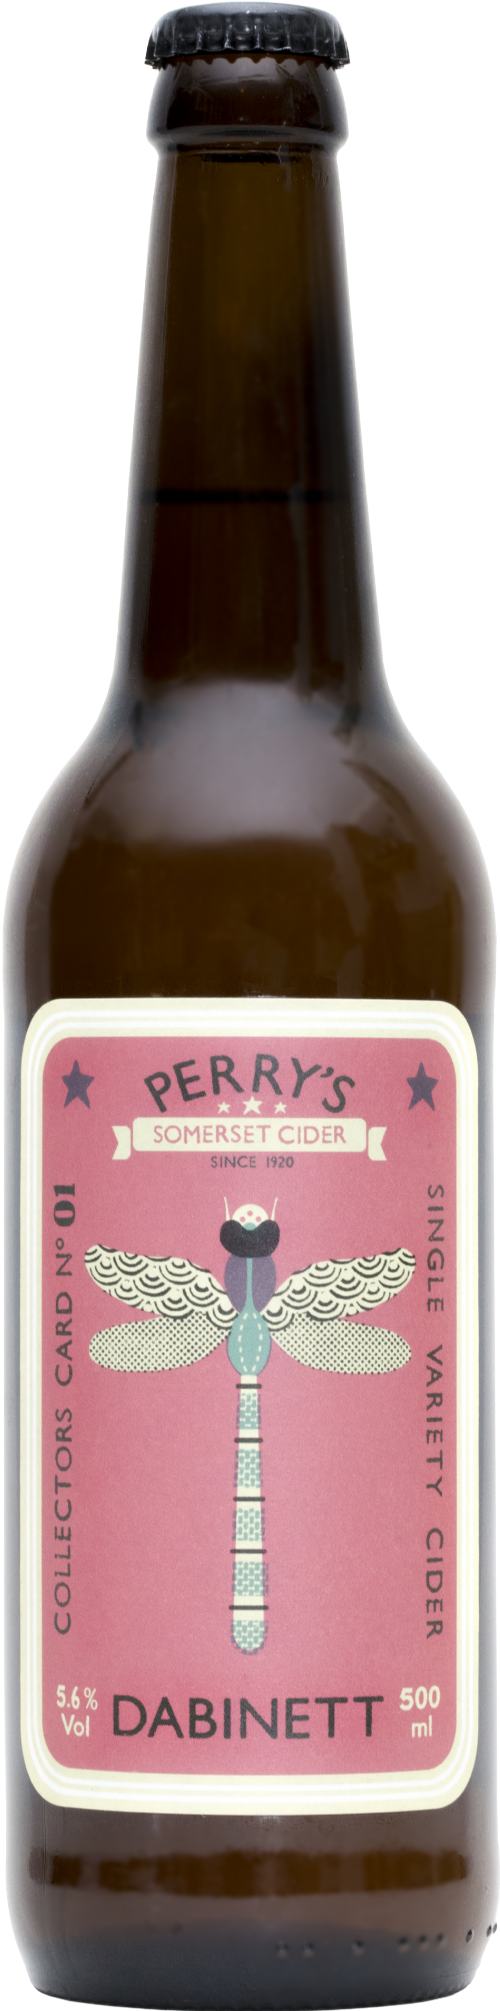 PERRY'S Somerset Dabinett Cider 500ml 6% ABV